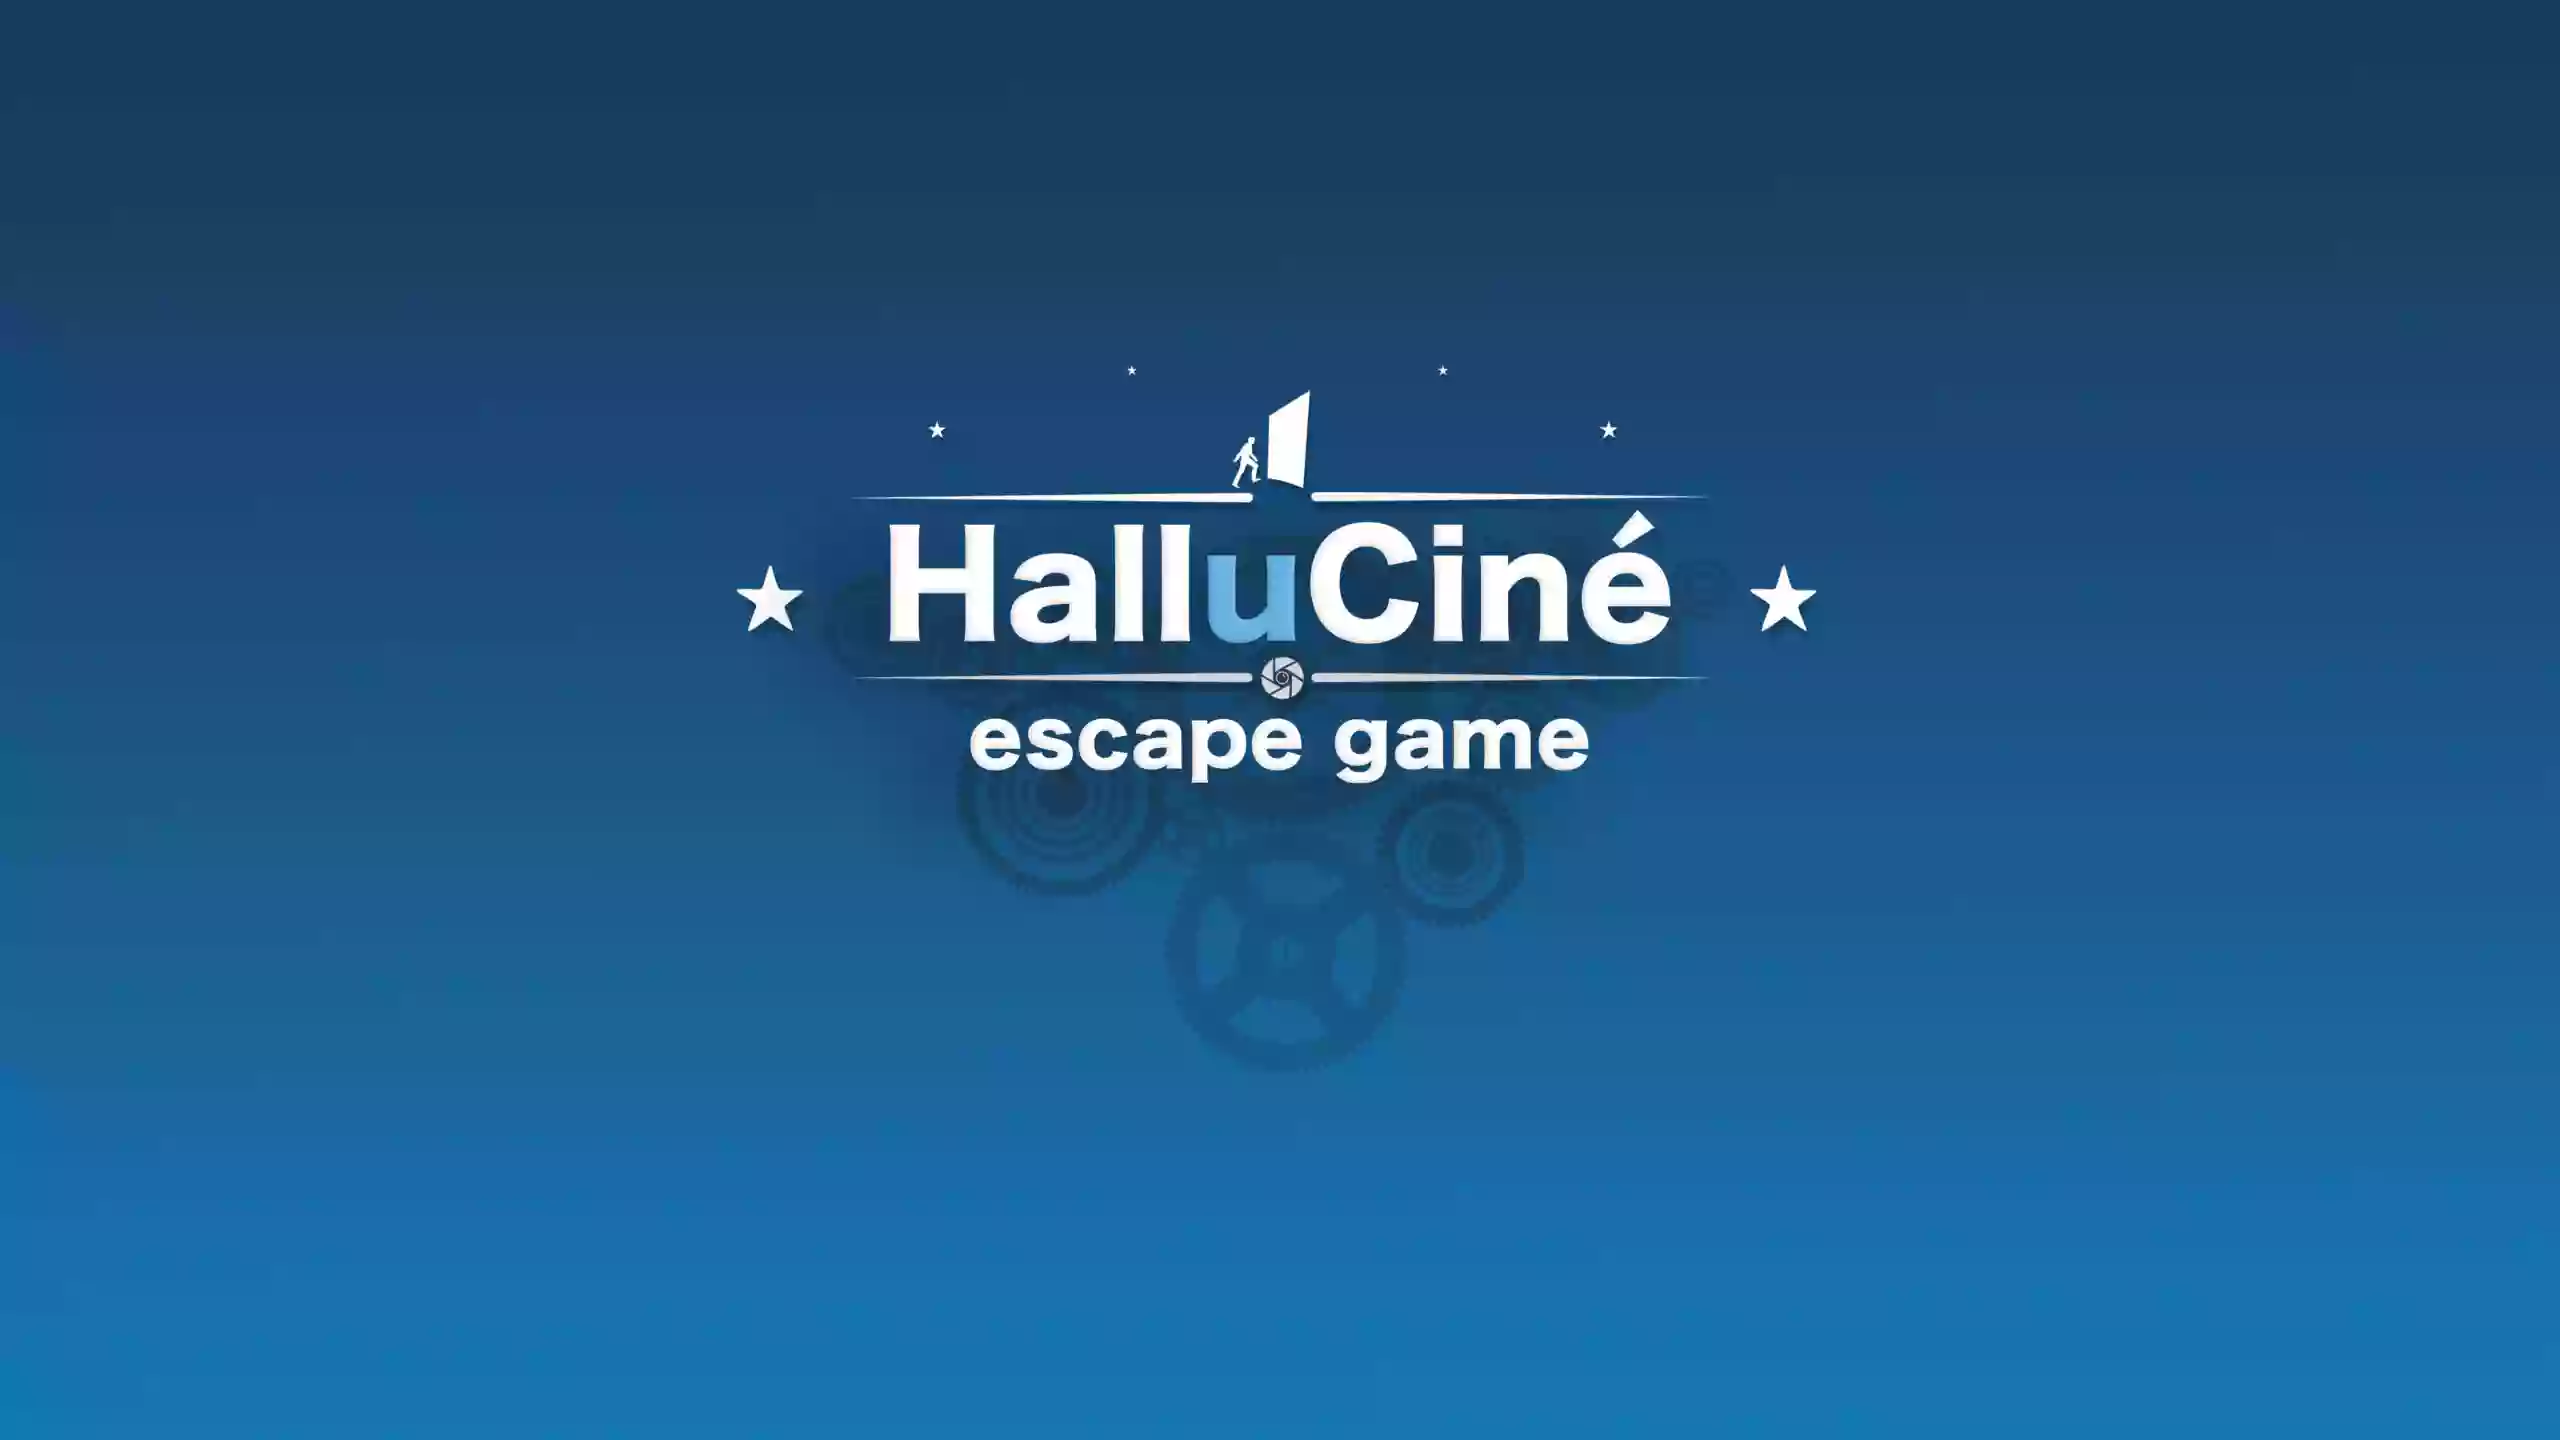 HalluCiné escape game